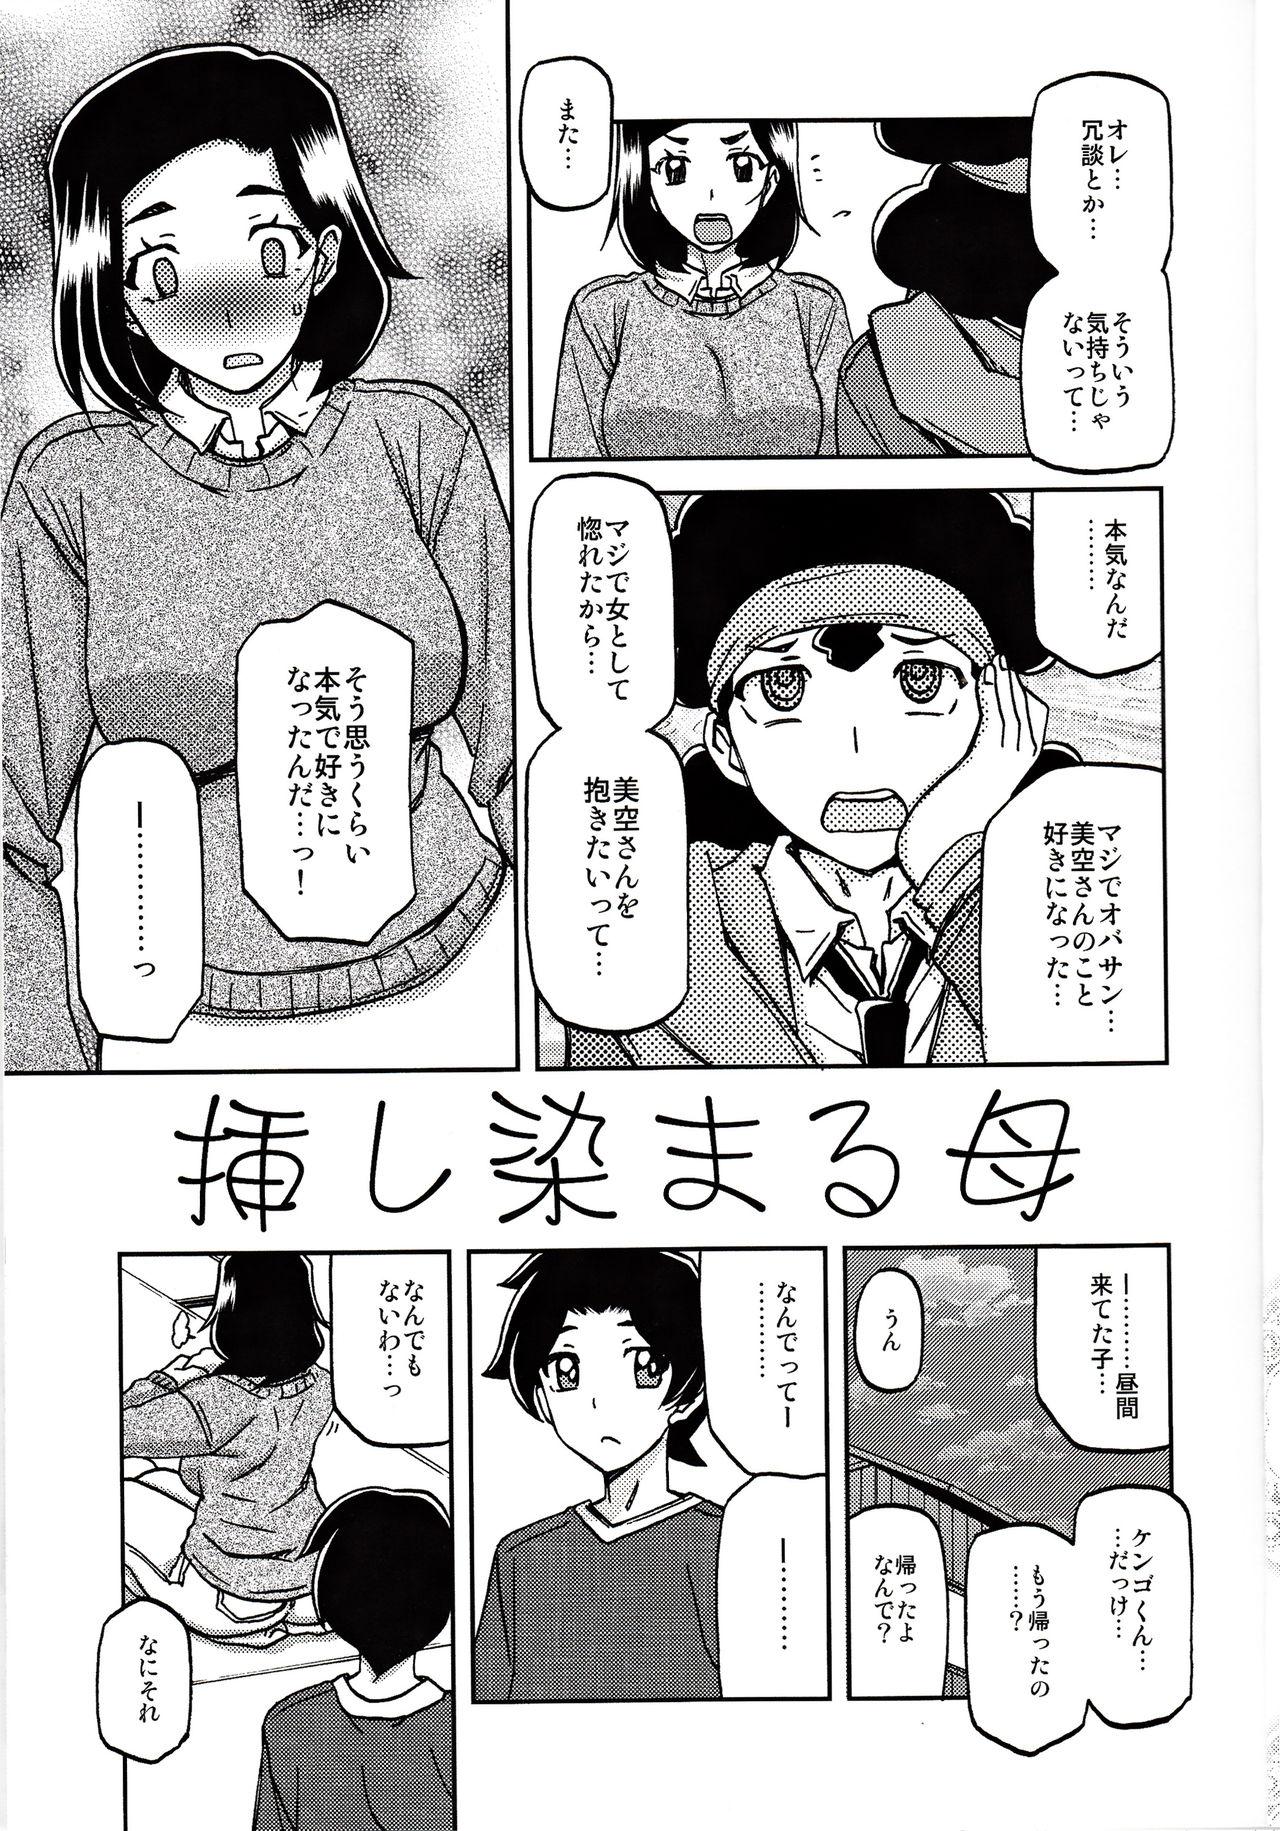 Realsex Akebi no Mi - Misora Katei - Akebi no mi Farting - Page 4